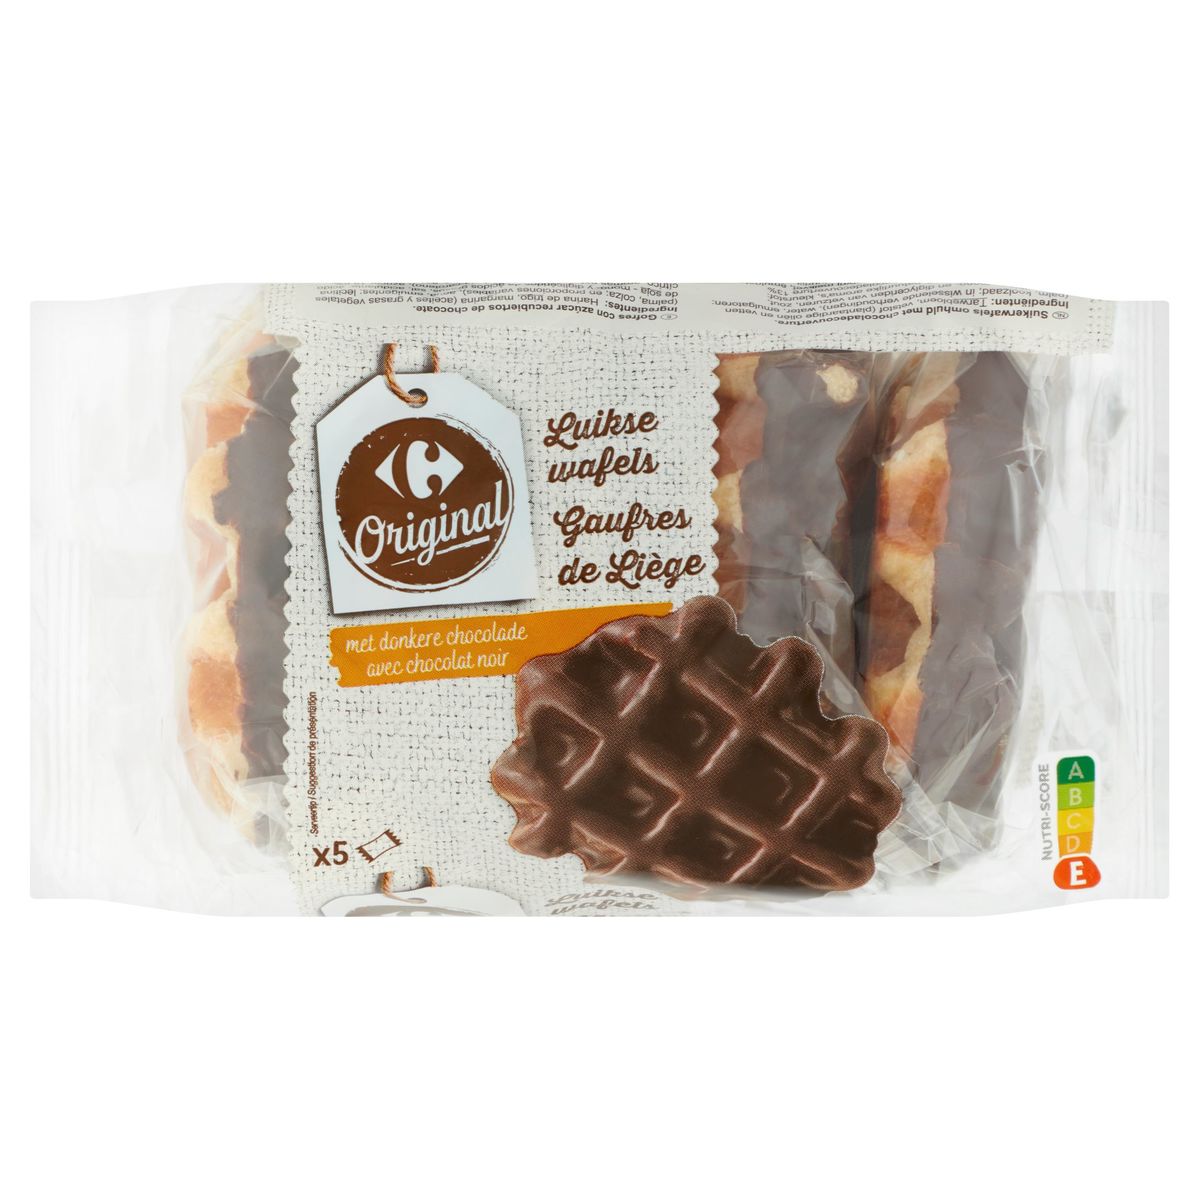 Carrefour Original Luikse Wafels met Donkere Chocolade 275 g